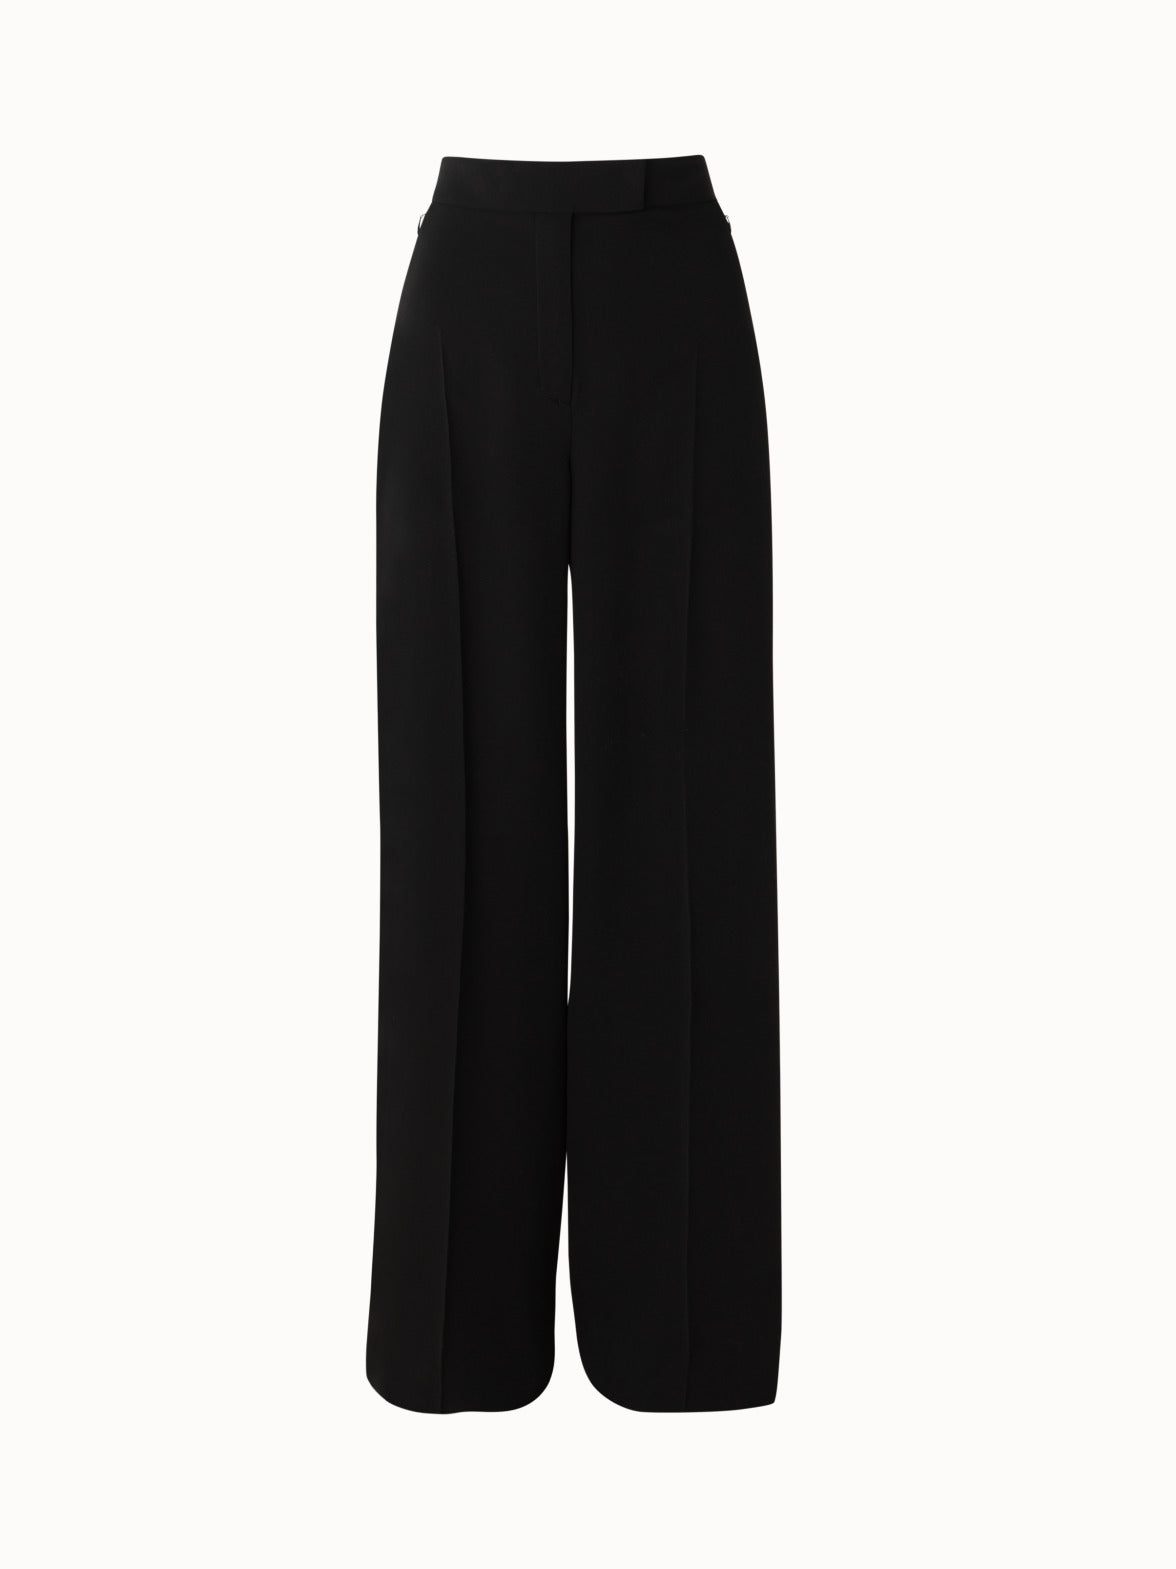 Buy Black Wide-Legged Pants Online - Ritu Kumar International Store View